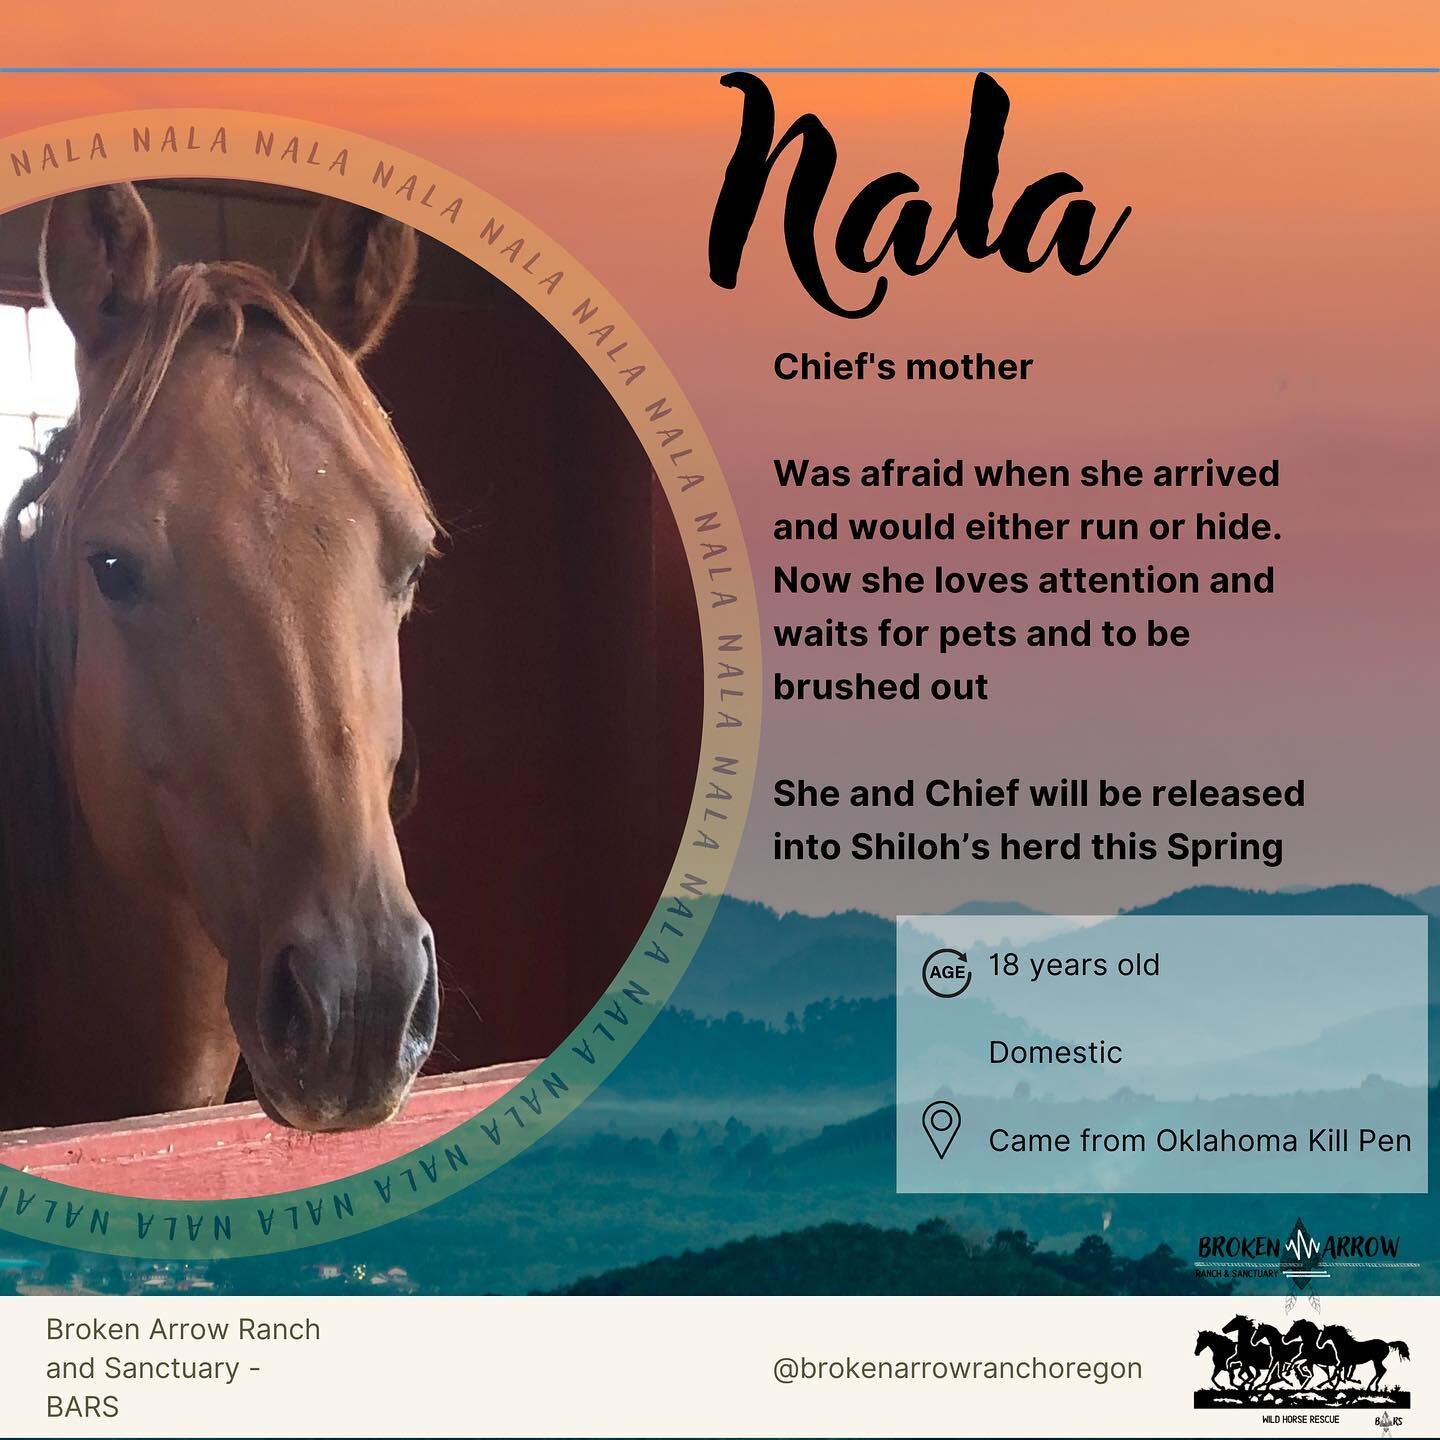 We love Nala! 🥰
.
.
.
#wildhorses #horserescue #horses #rescue #rescueanimals #savethehorses #freedom #safe #momma #ranch #nonprofit #inbend #bend #heart #love #power